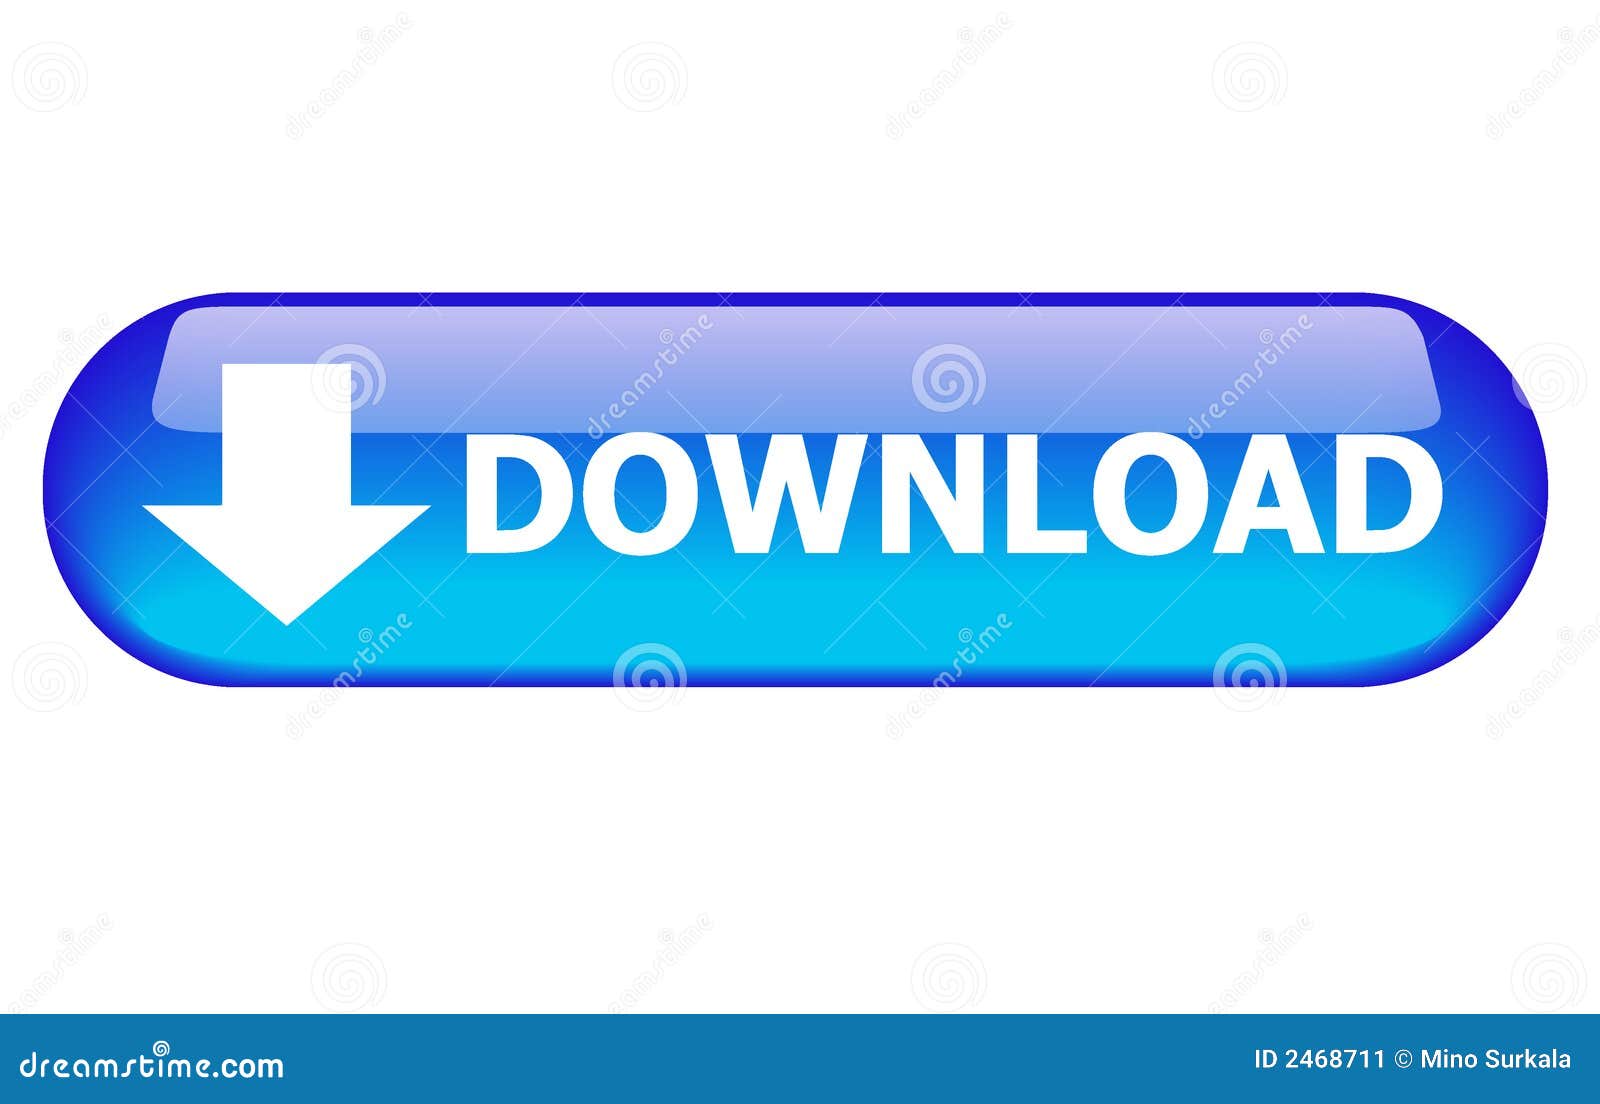 AutoCAD 2019 23.0 Crack   Free Download [Win/Mac] [2022-Latest]